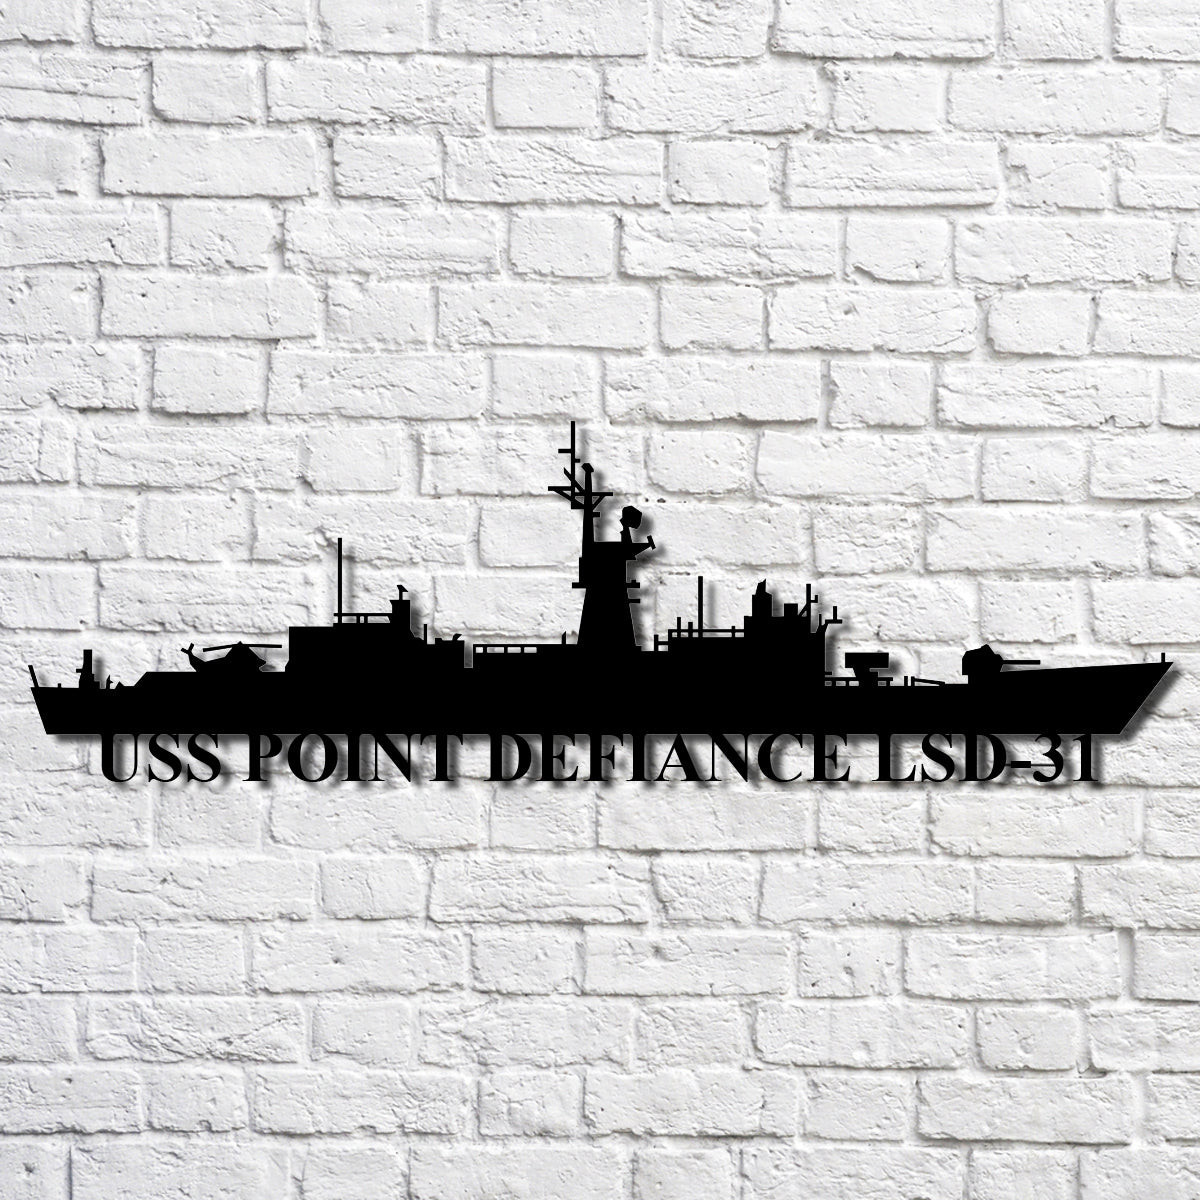 Uss Point Defiance Lsd31 Navy Ship Metal Art, Gift For Navy Veteran, Navy Ships Silhouette Metal Art, Navy Home Decor Laser Cut Metal Signs Custom Gift Ideas 12x12IN